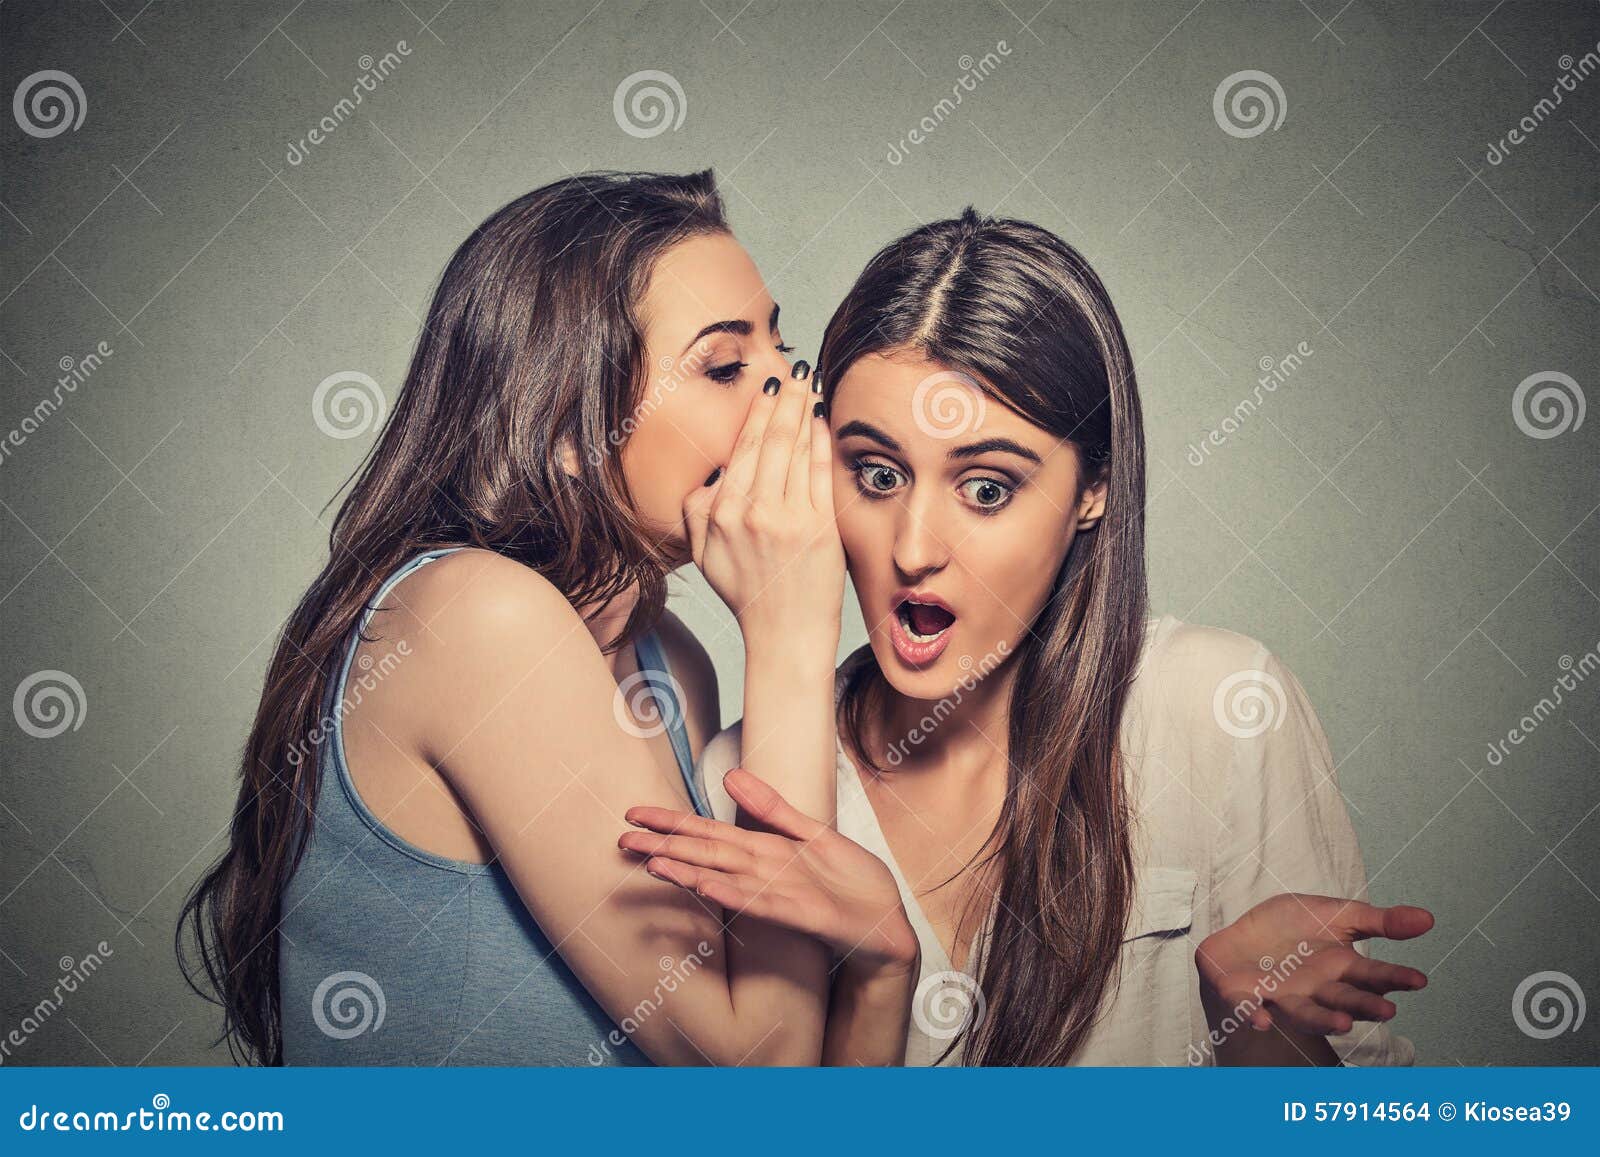 girl whispering into woman ear telling her shocking secret